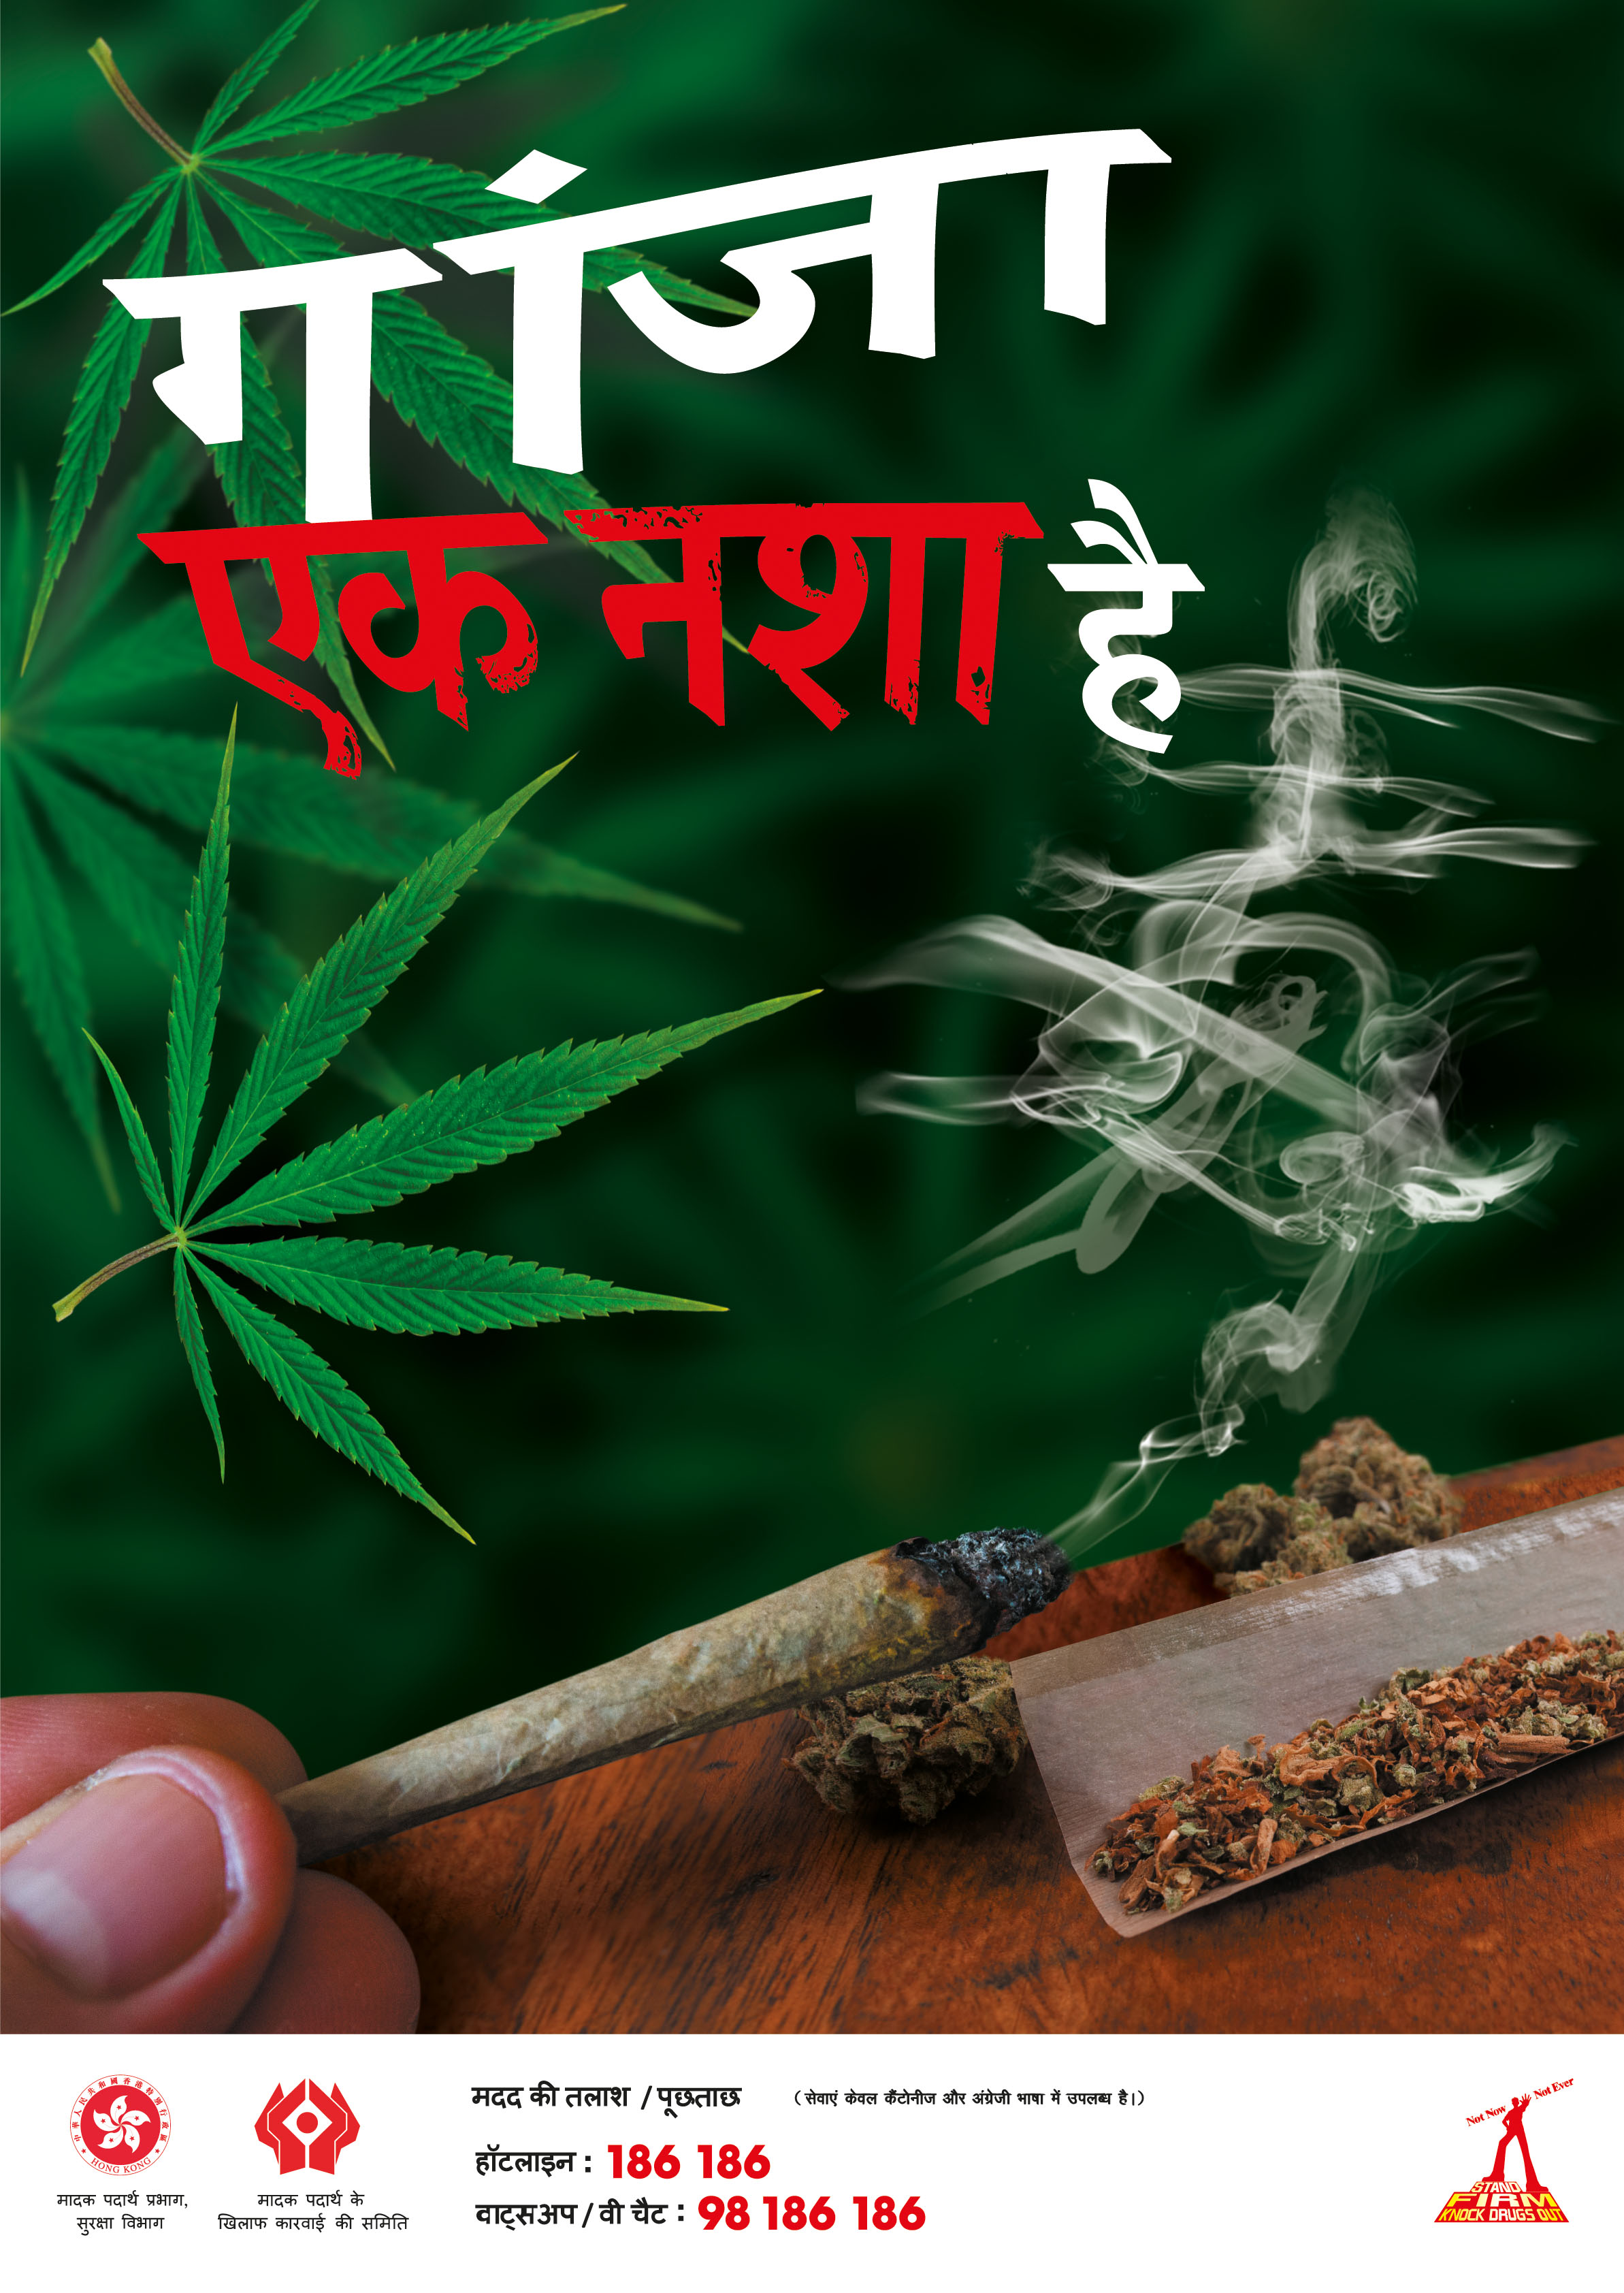 Anti-drug poster "Cannabis is a drug" - Hindi version